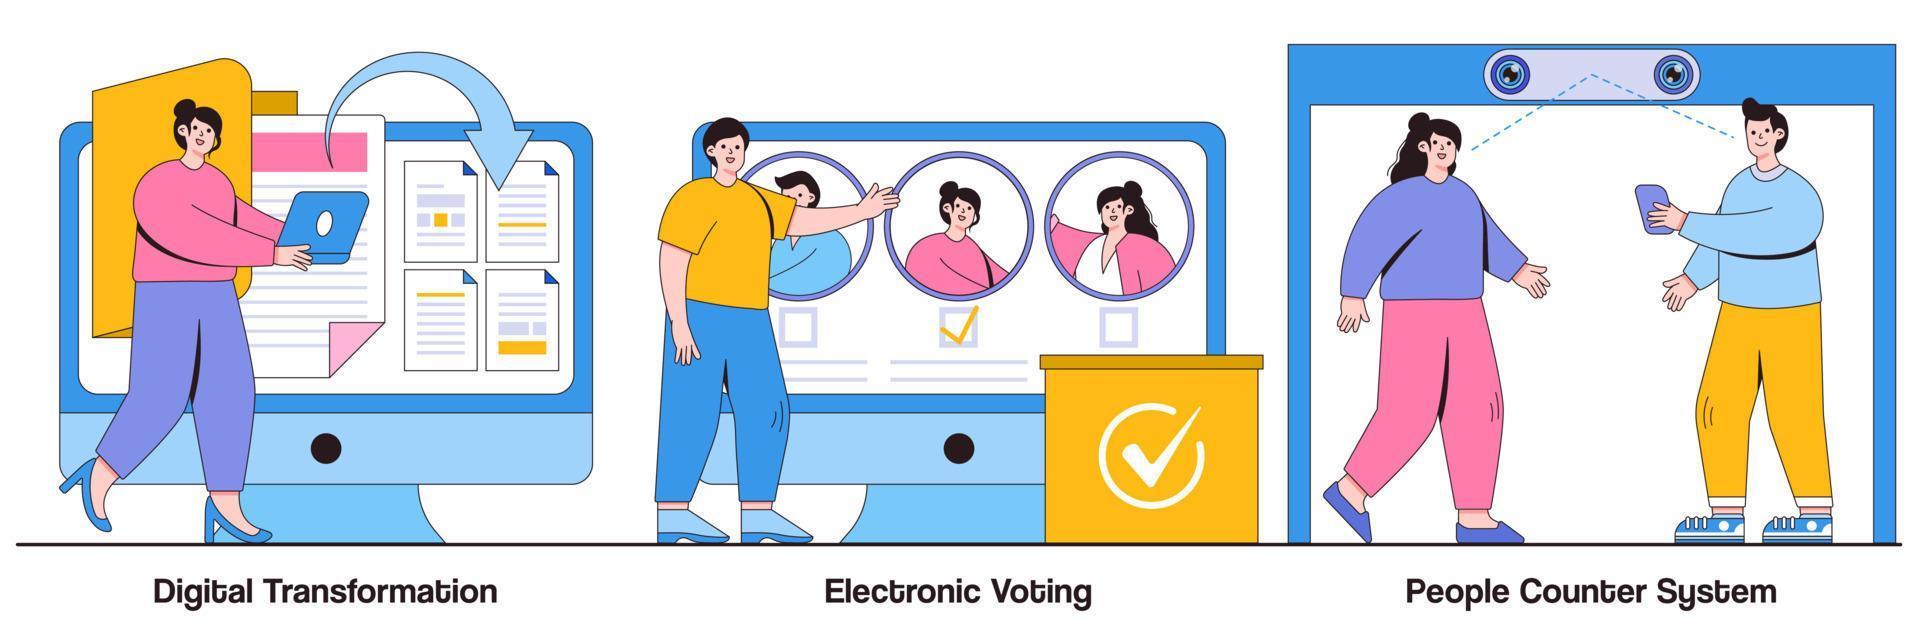 digitale transformatie, elektronisch stemmen en mensentellersysteem geïllustreerd pakket vector